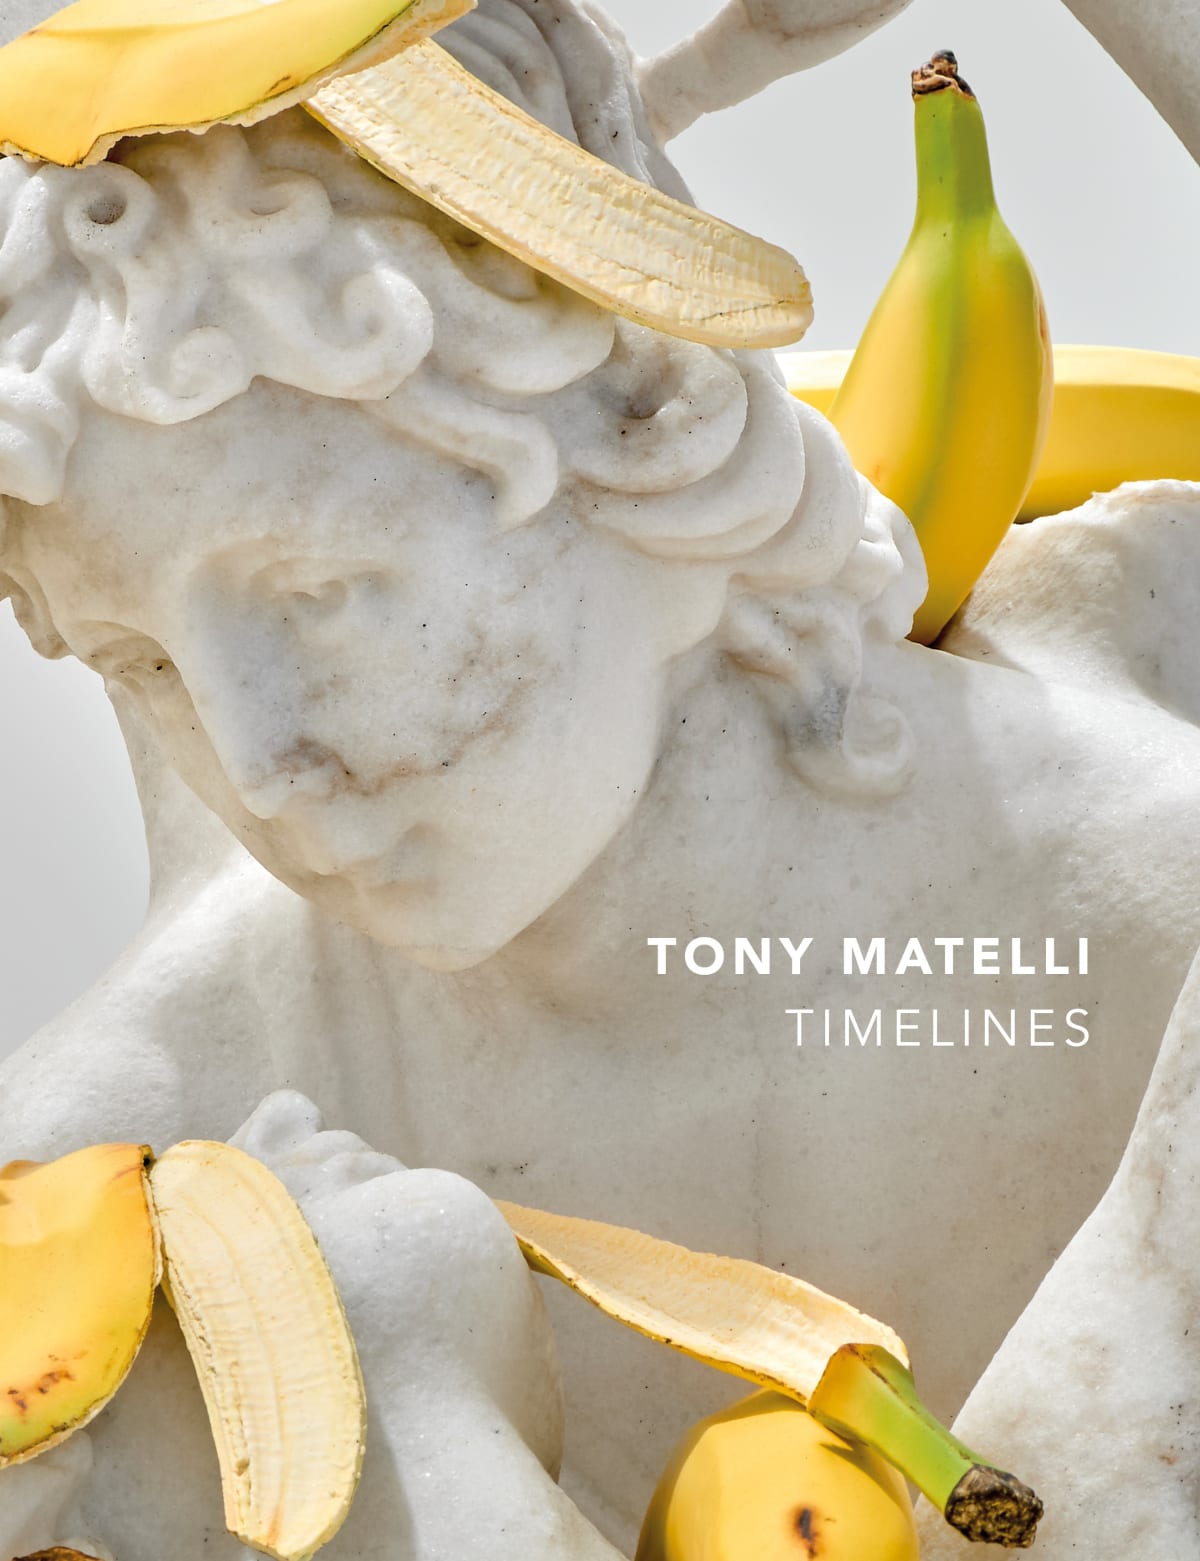 Tony Matelli